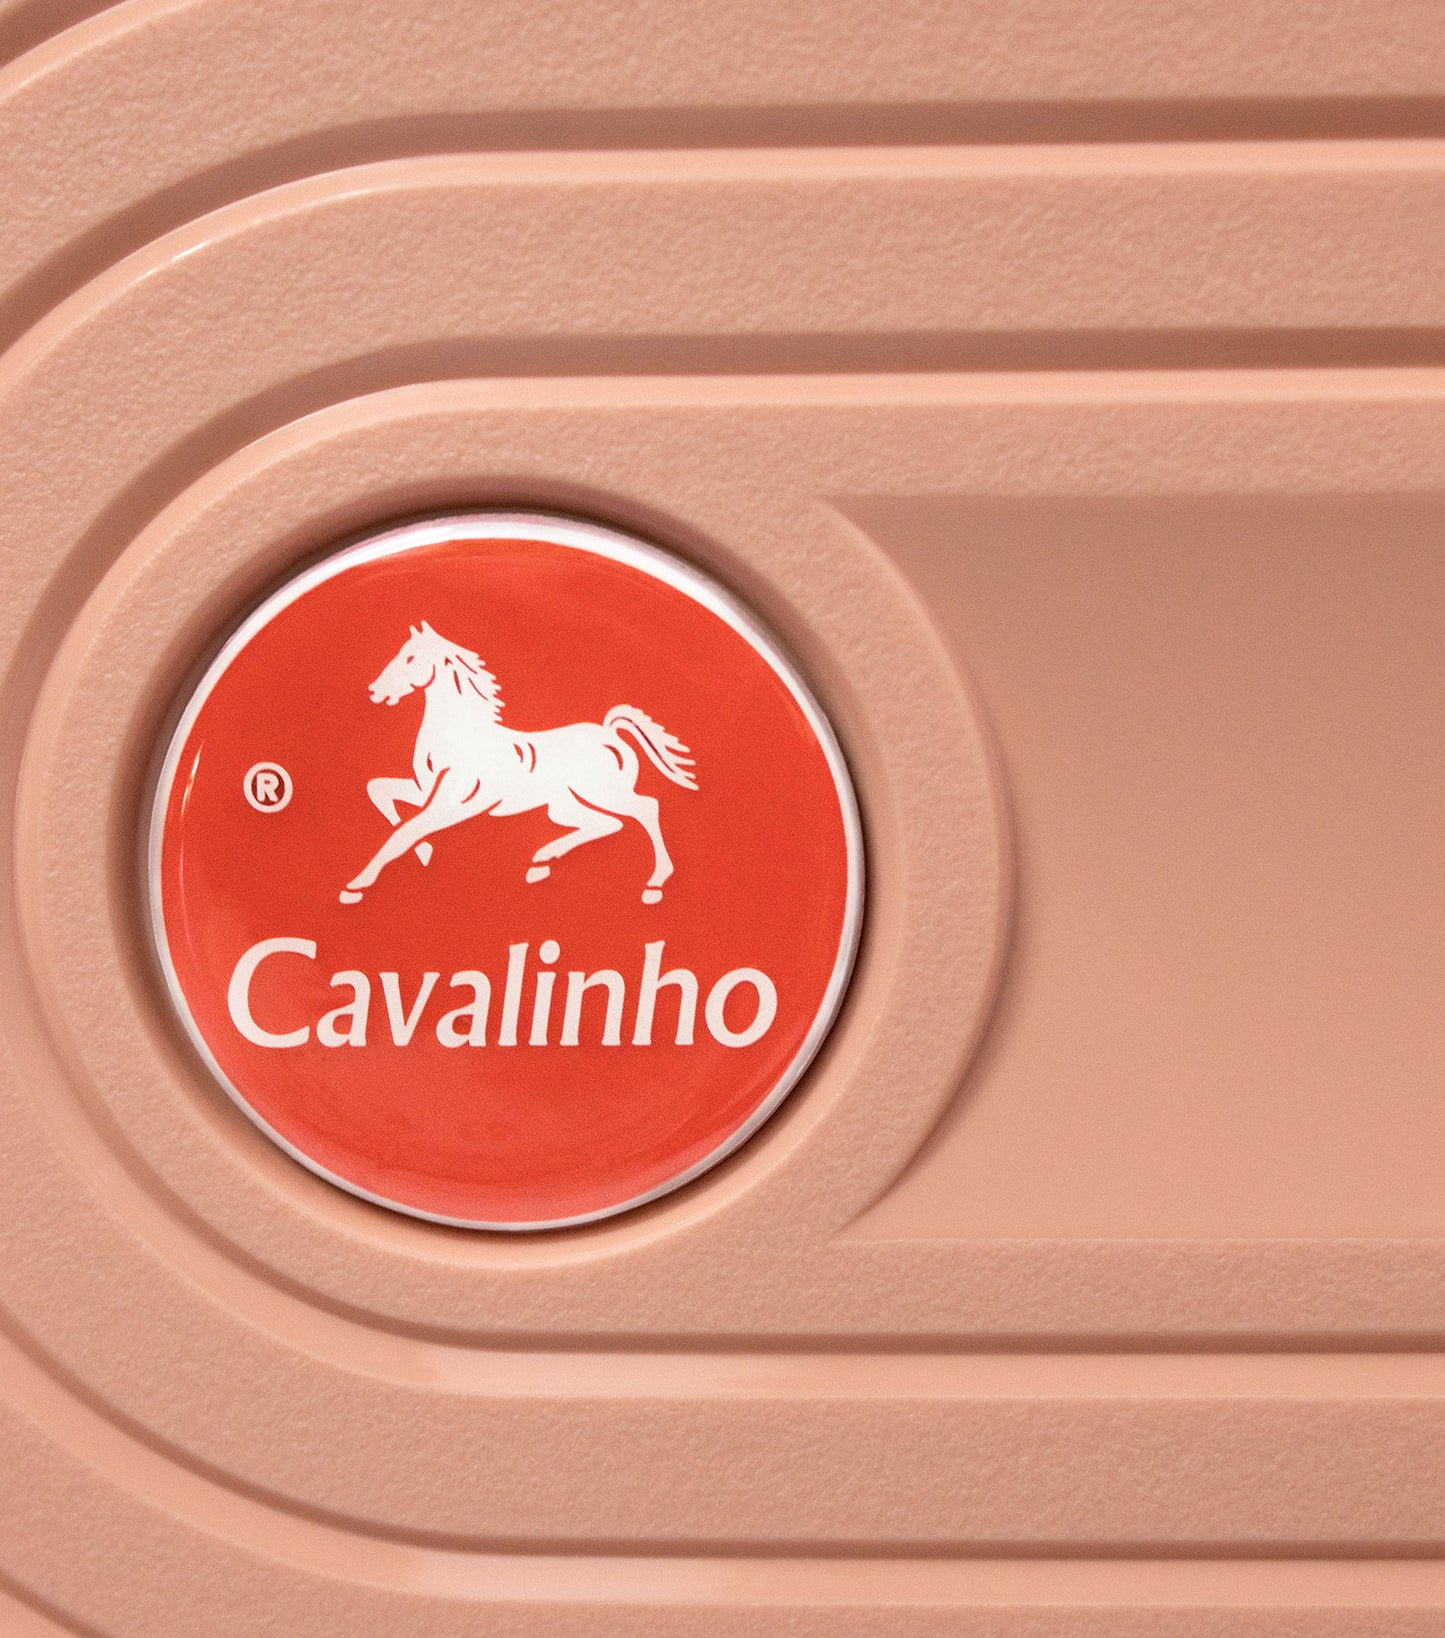 Cavalinho Colorful Carry-on Hardside Luggage (19") - 19 inch Salmon - 68020004.11.19_P05